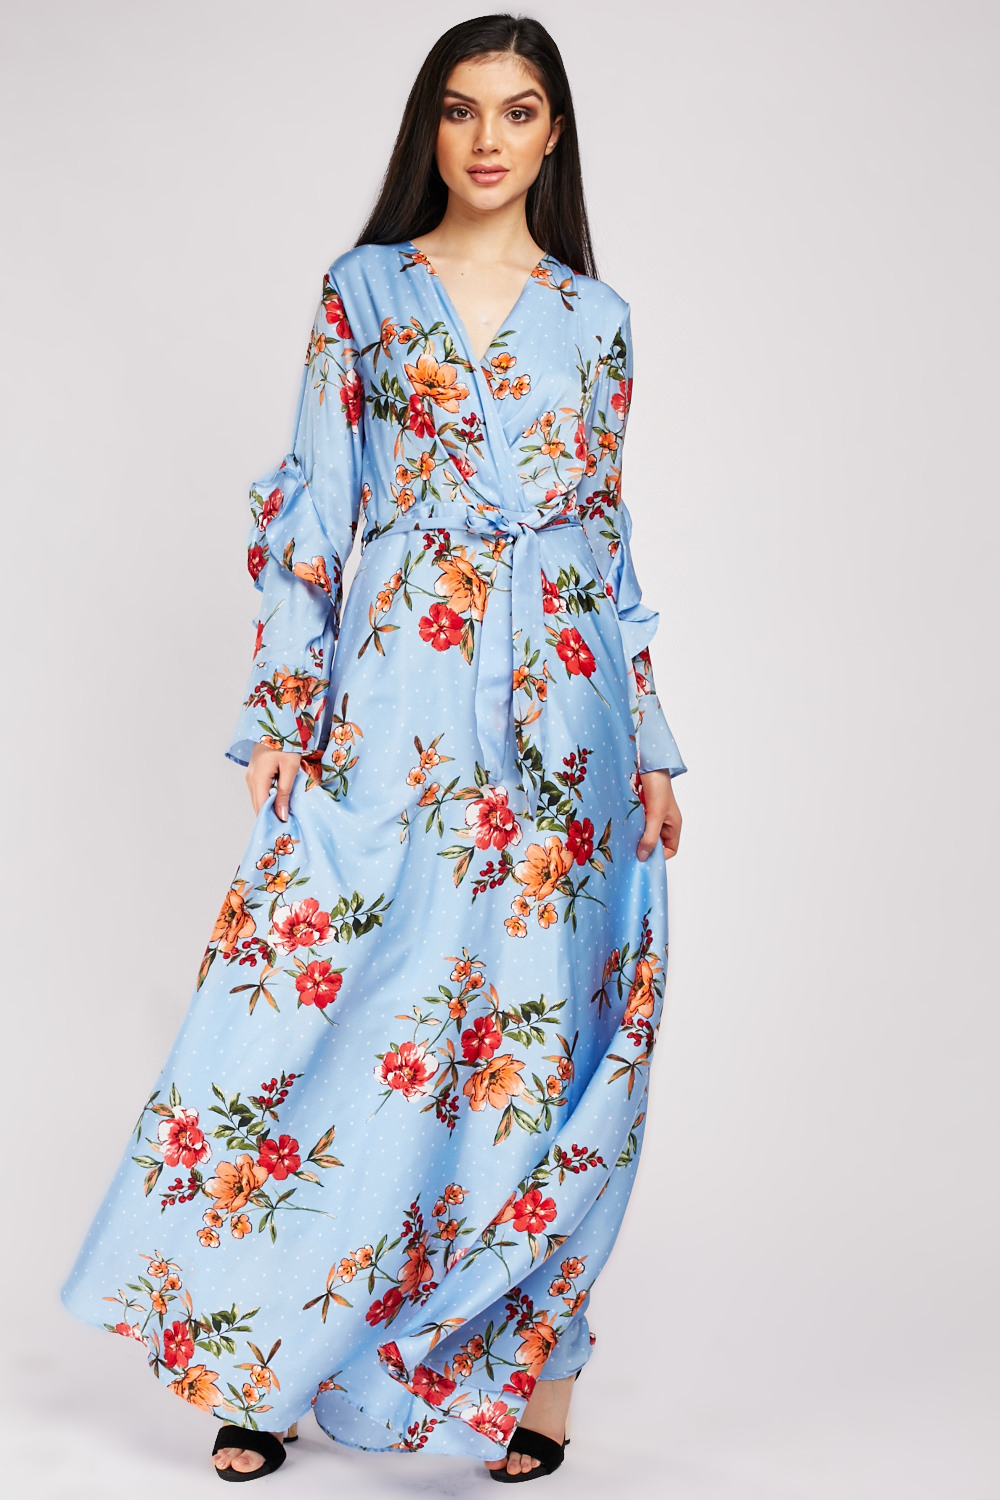 Ruffle Floral Sleeve Maxi Dress - Just $6